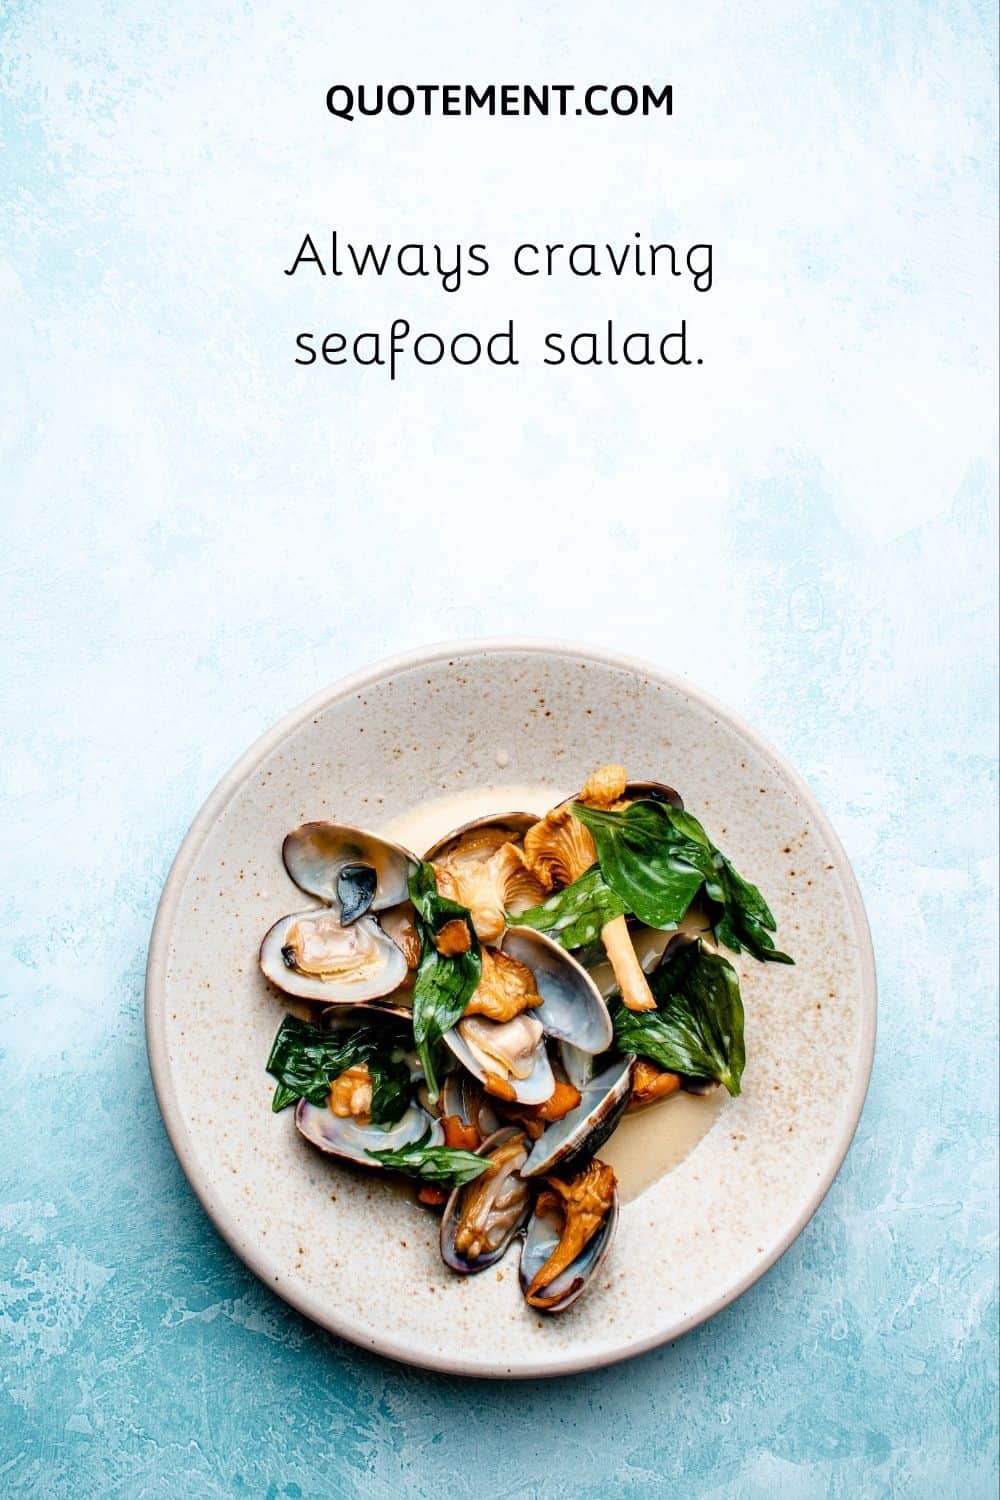 Always craving seafood salad.